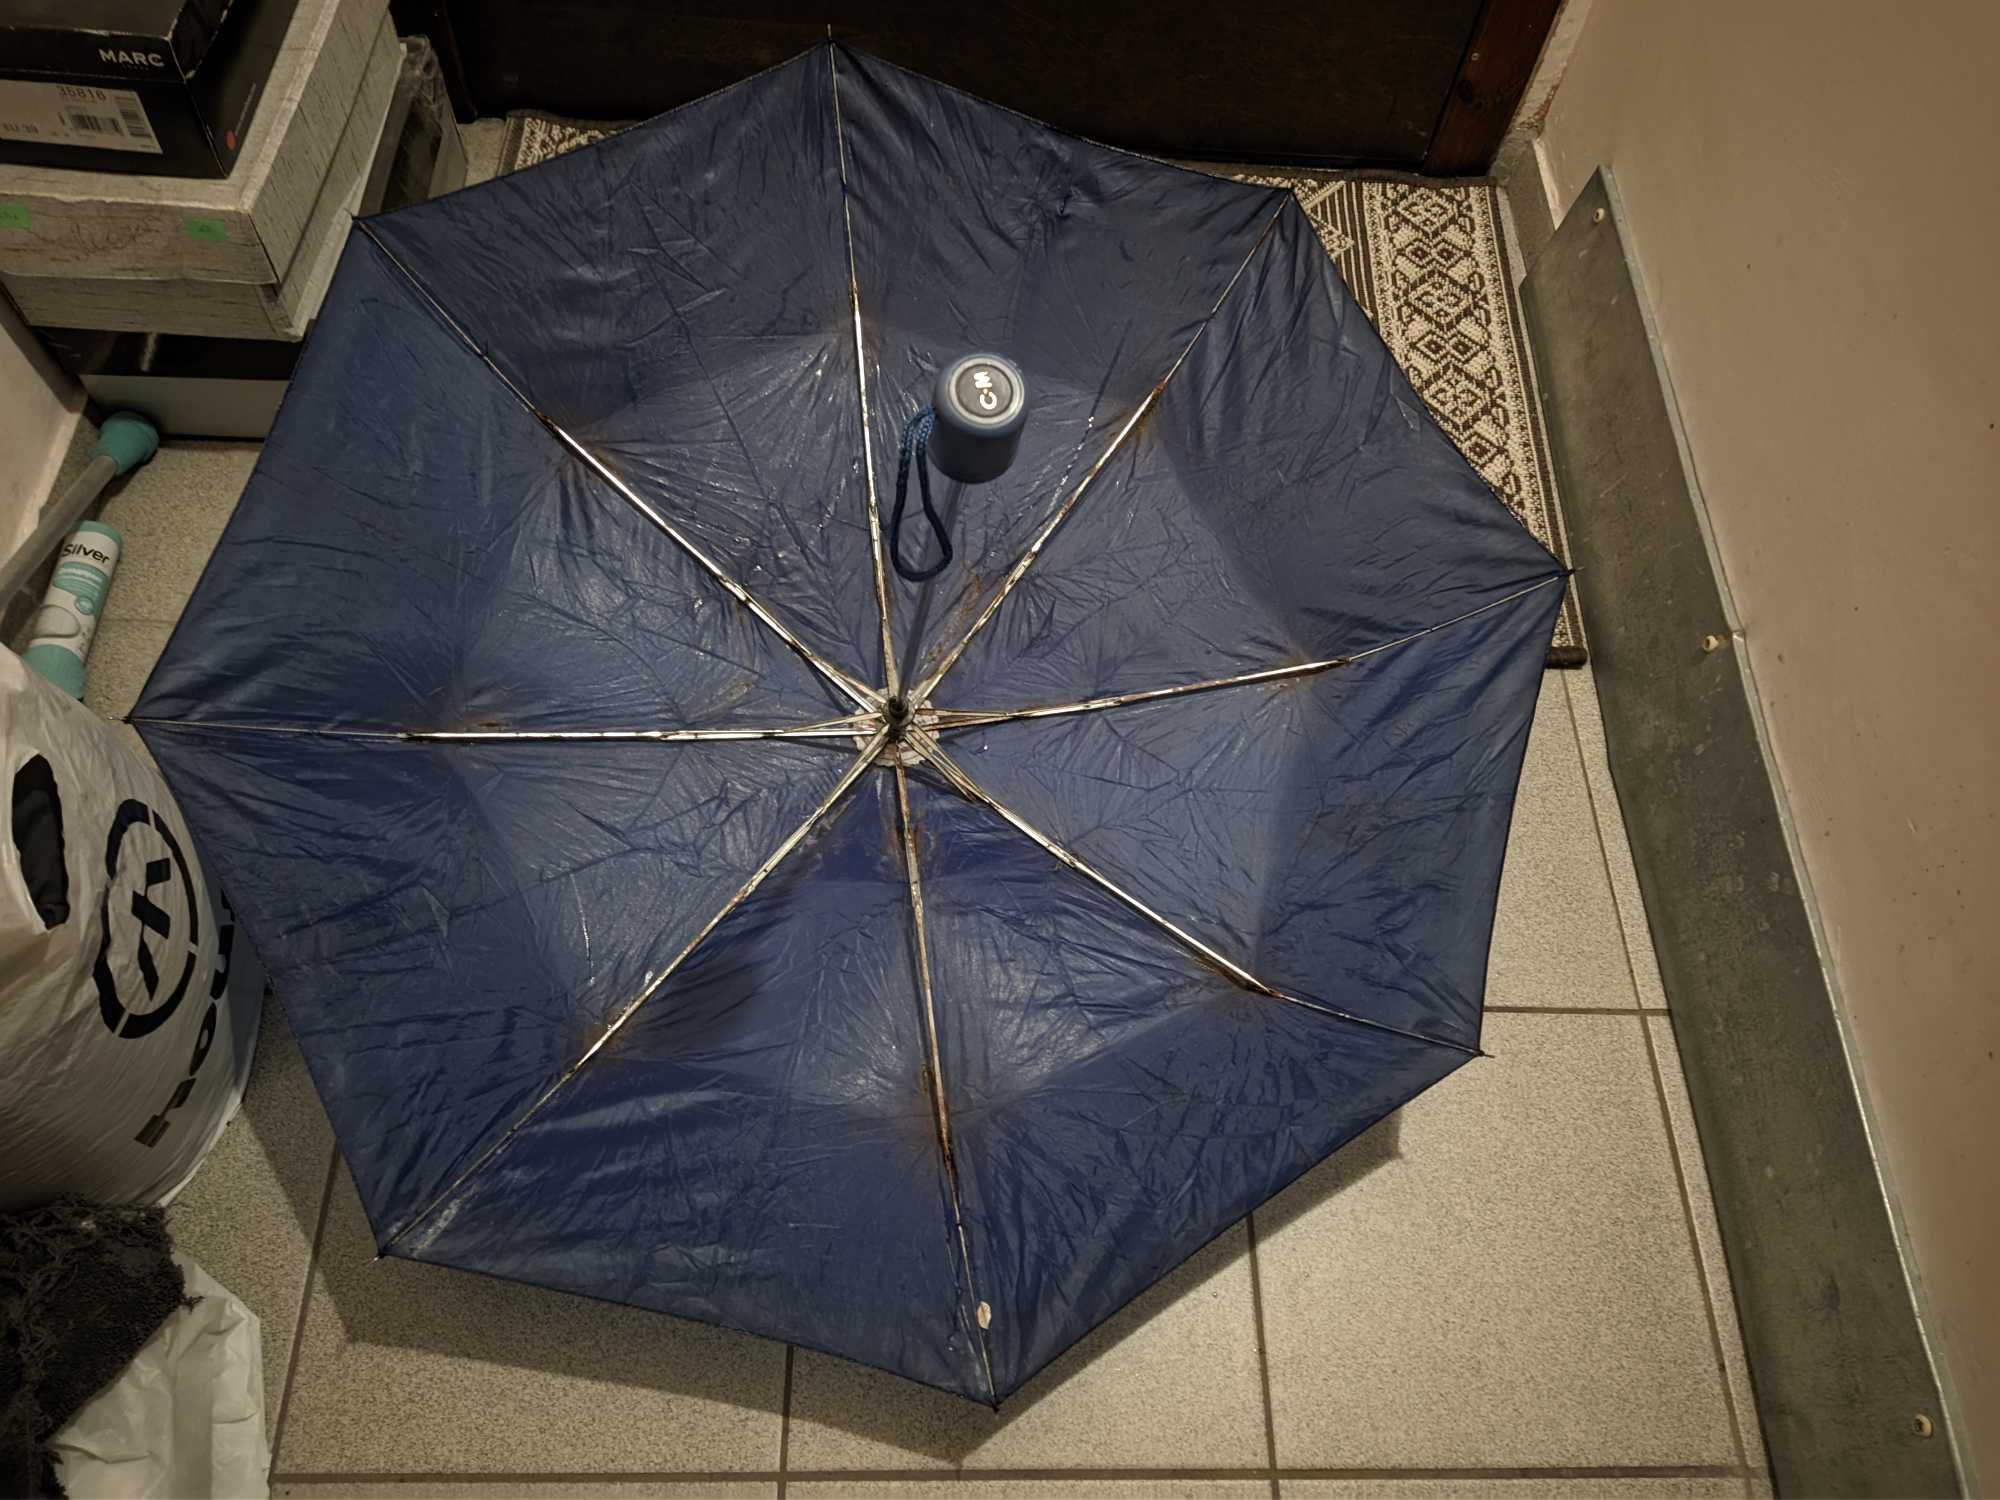 Зонтик зонт синий